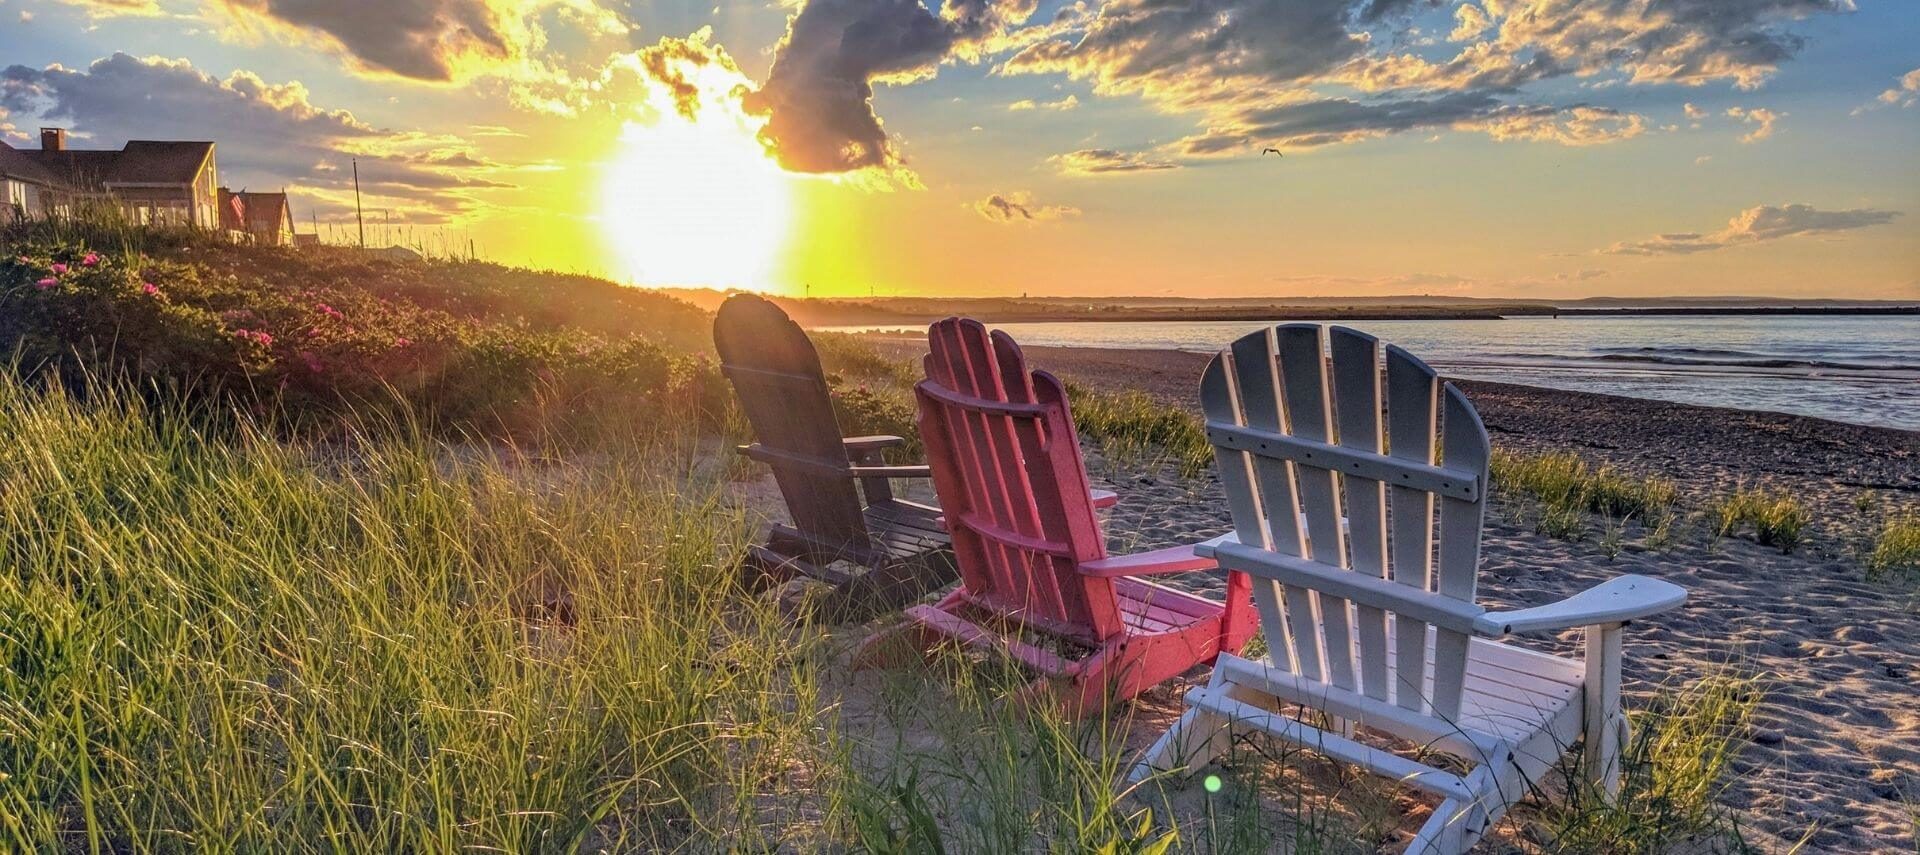 Three Adirondack chairs on a Cape Cod beach at sunset.